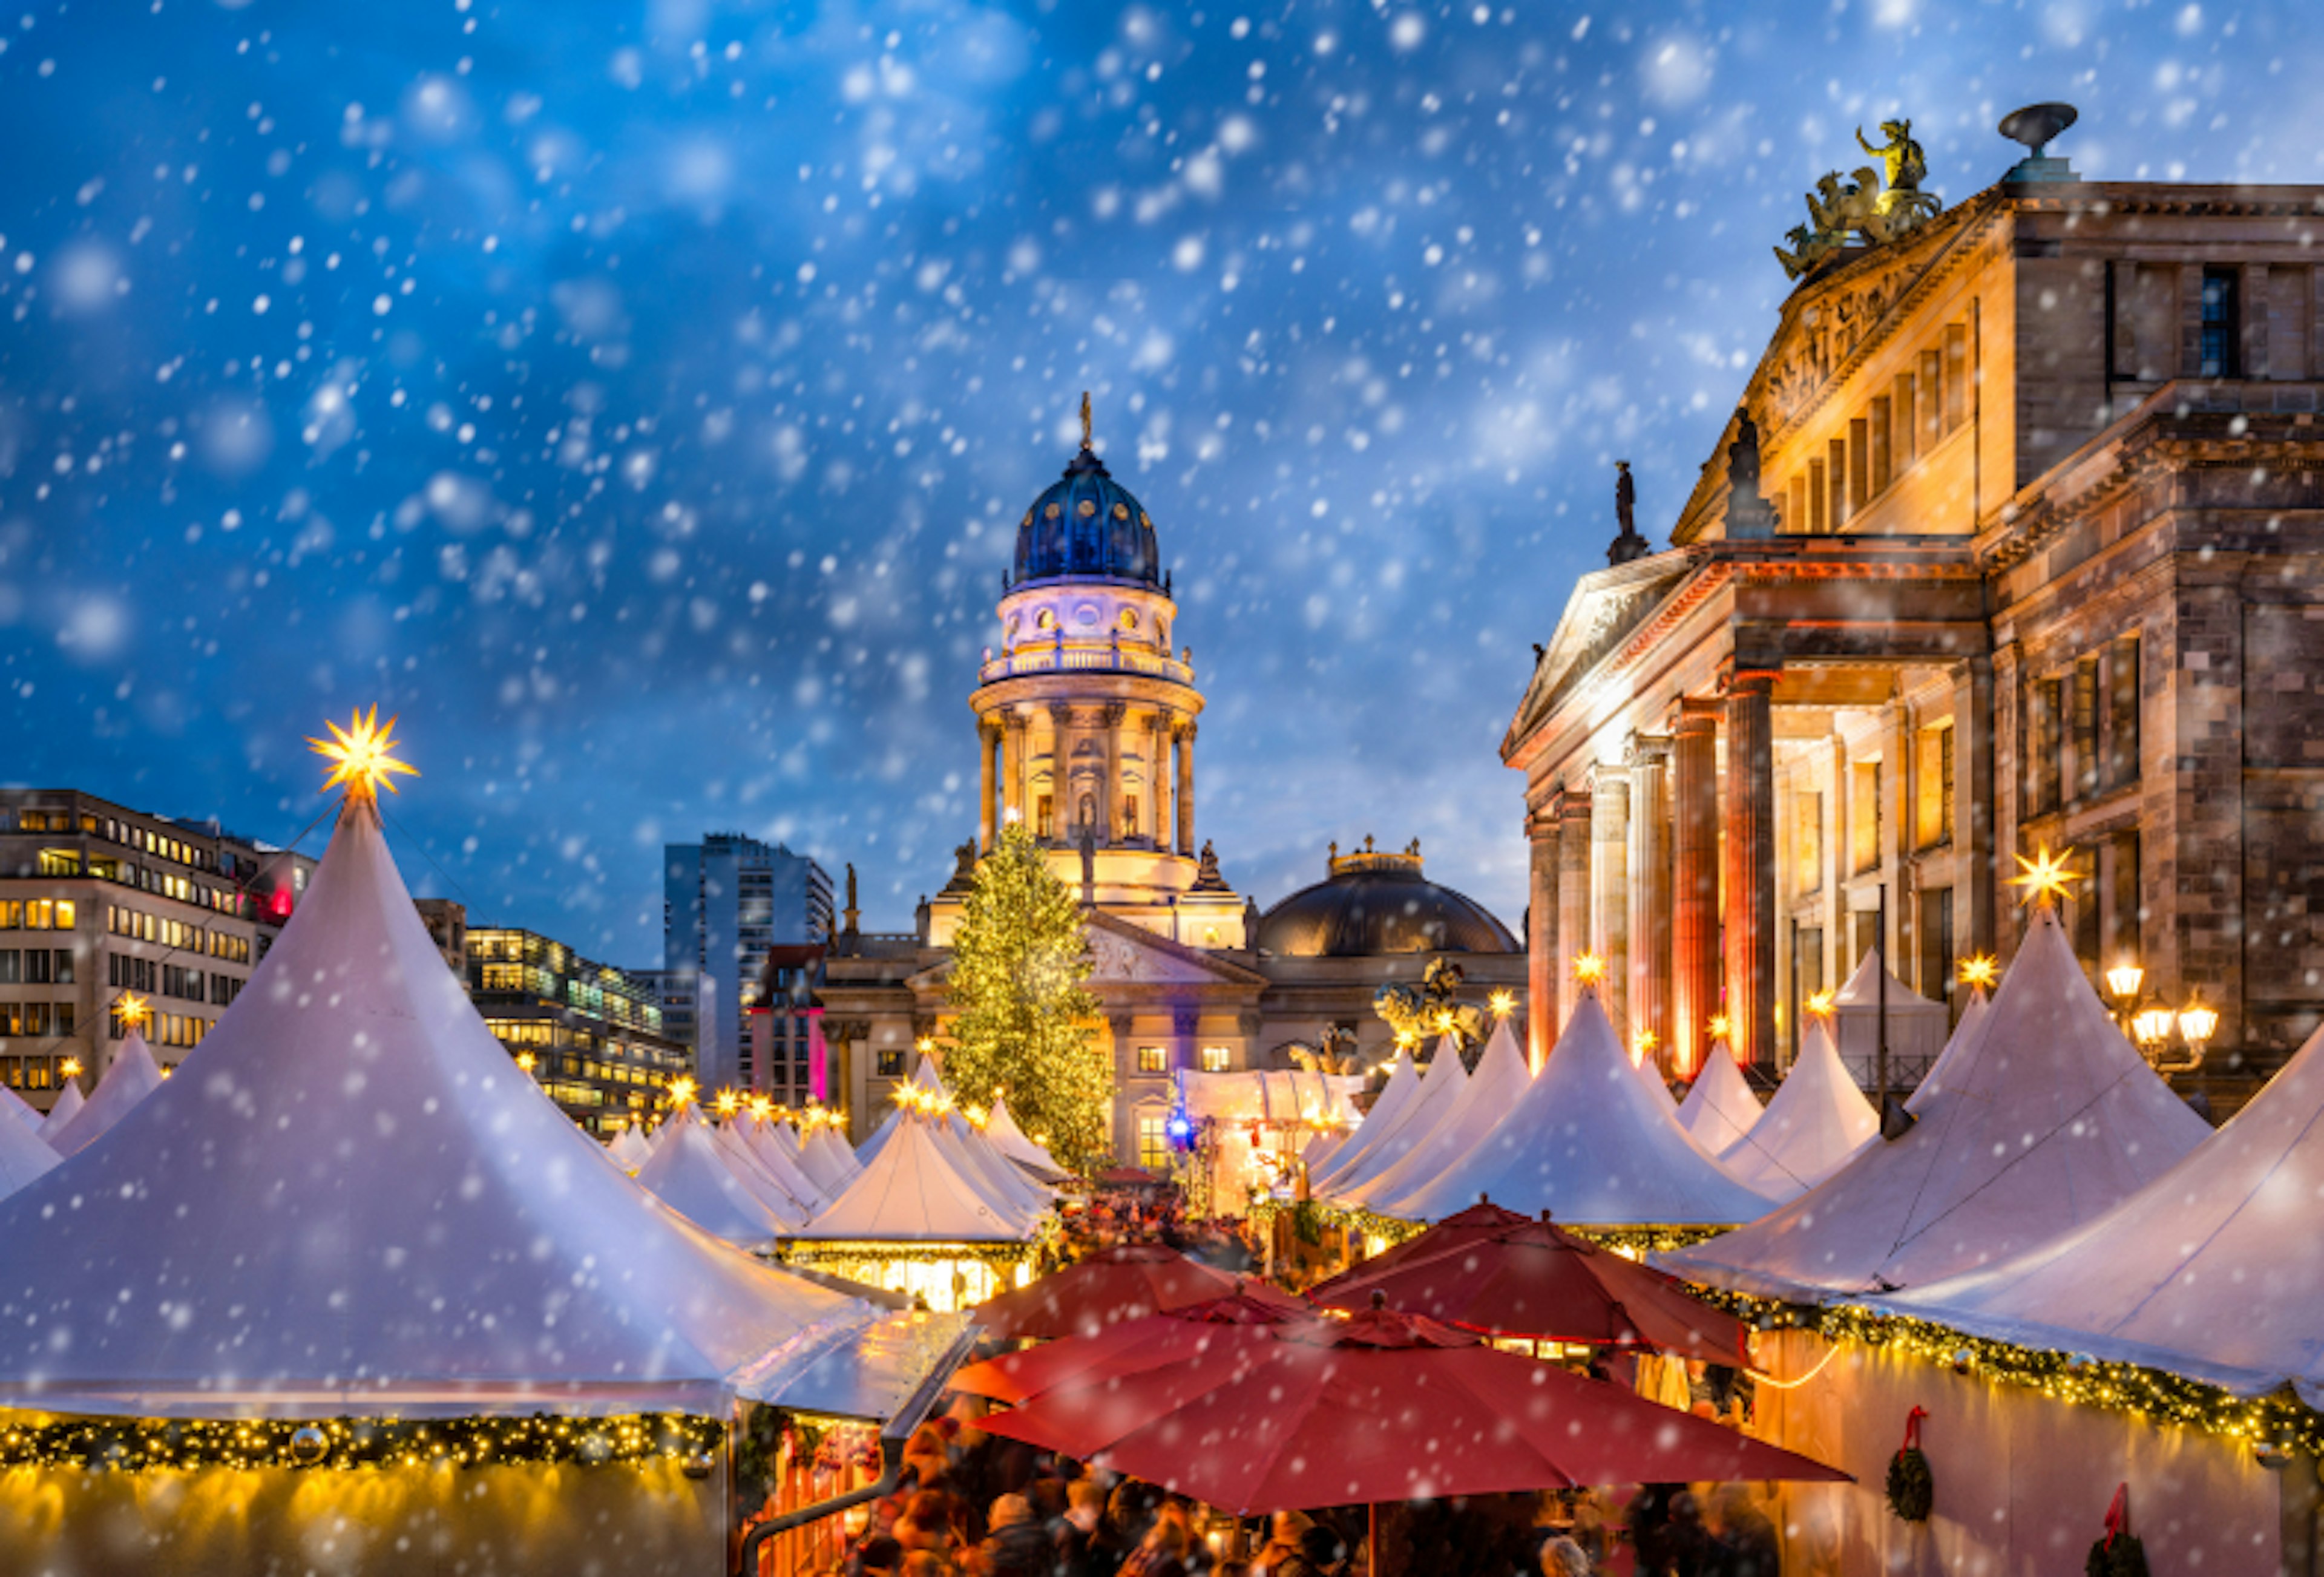 Traditional German Christmas market at the Gendarmenmarkt square in Berlin